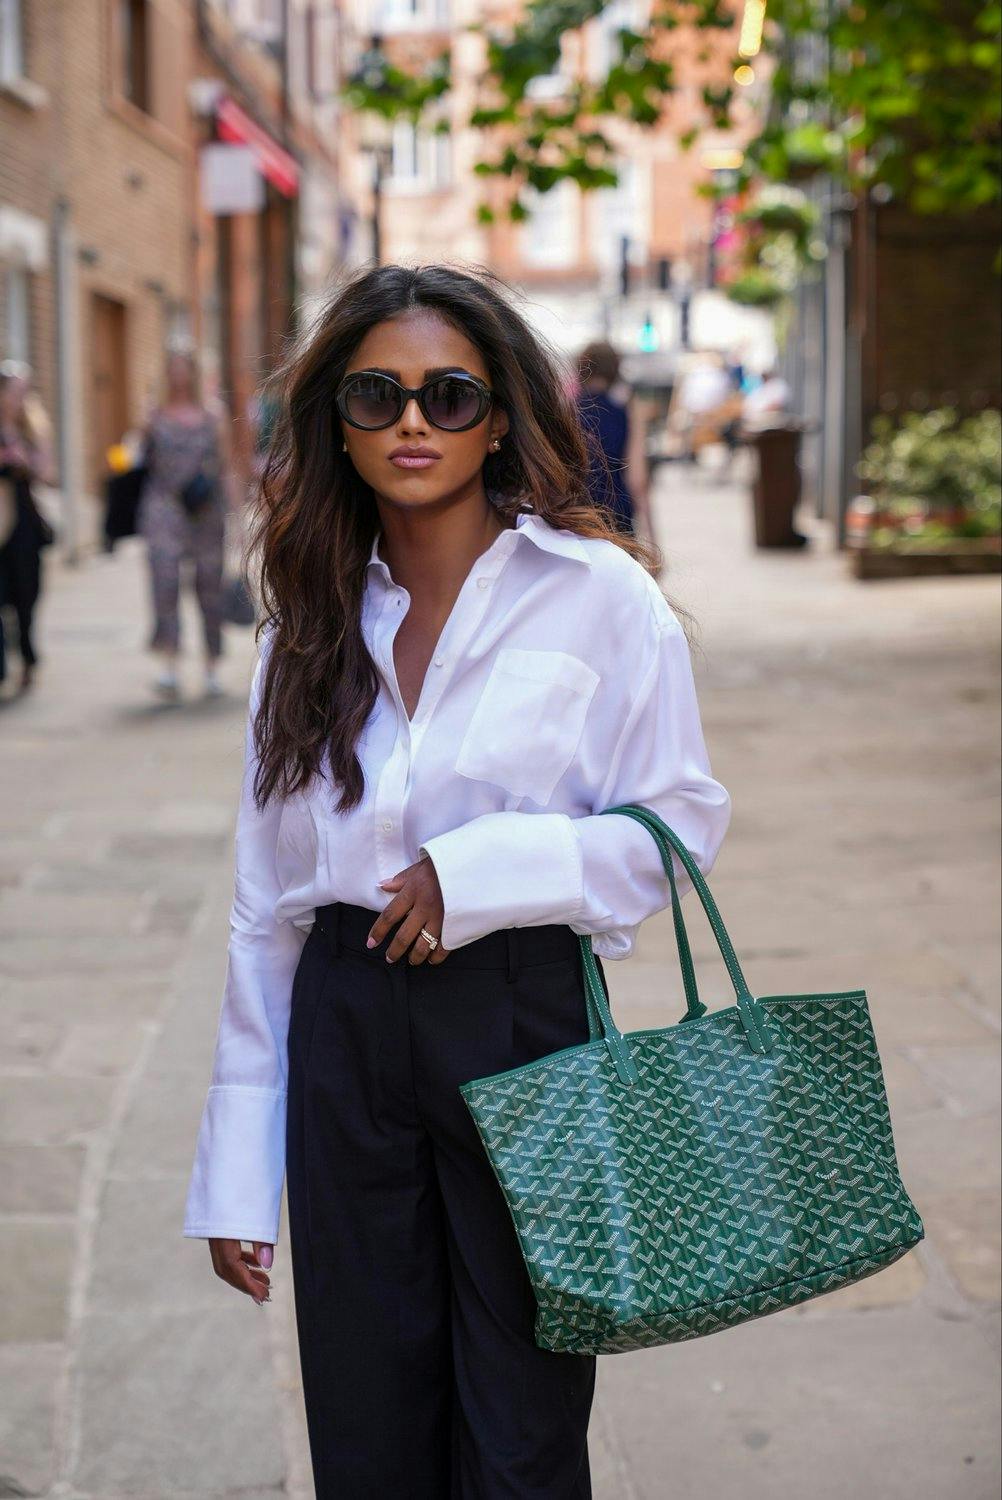 Sachini Dilanka wearing a crisp white shirt and a green Goyard bag